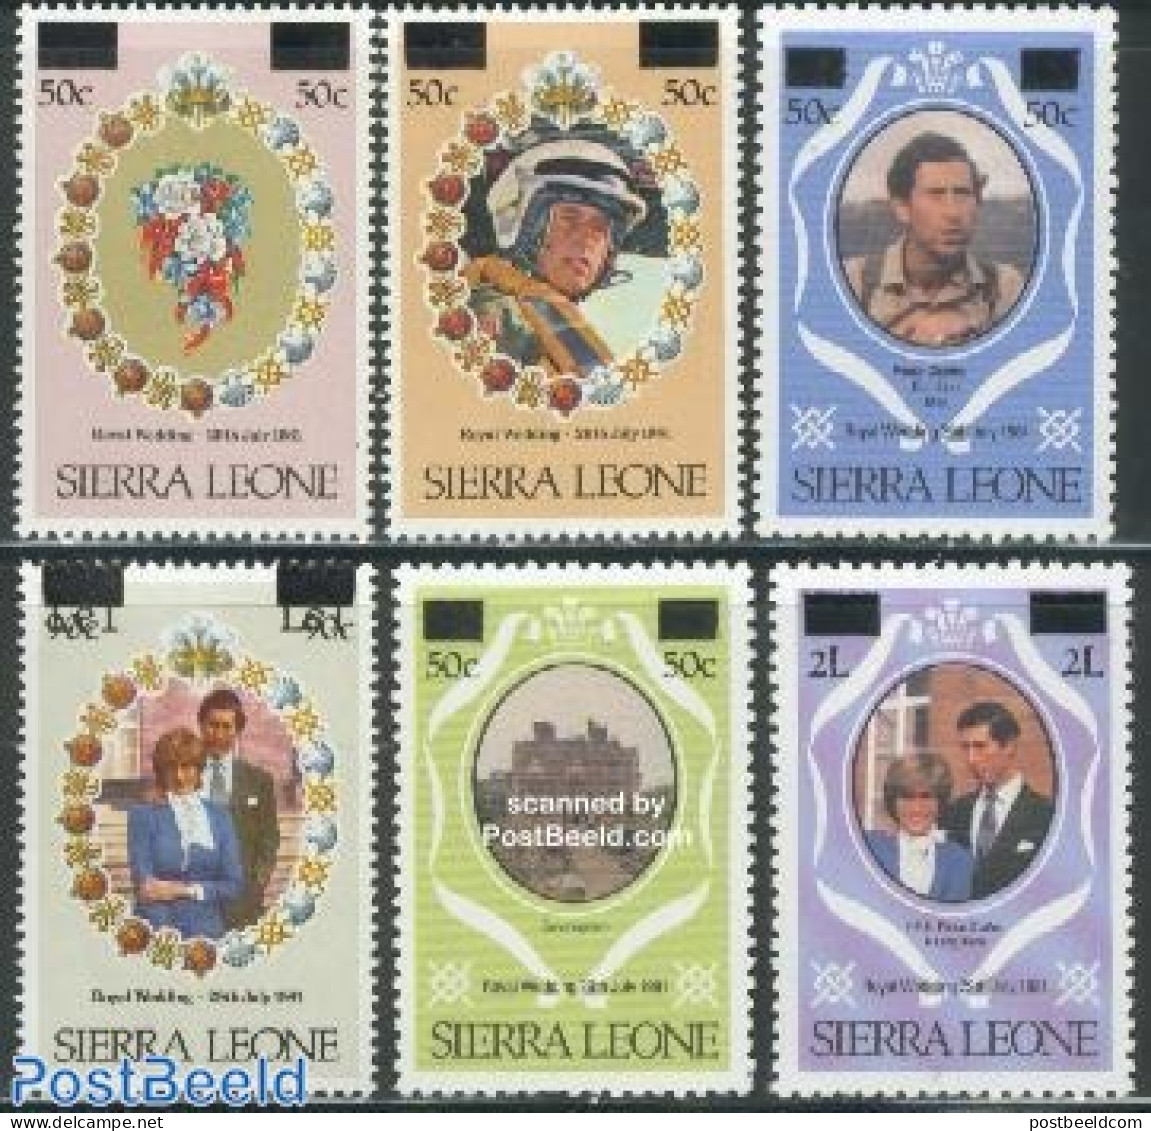 Sierra Leone 1982 Charles & Diana Overprints 6v, Mint NH, History - Charles & Diana - Kings & Queens (Royalty) - Royalties, Royals